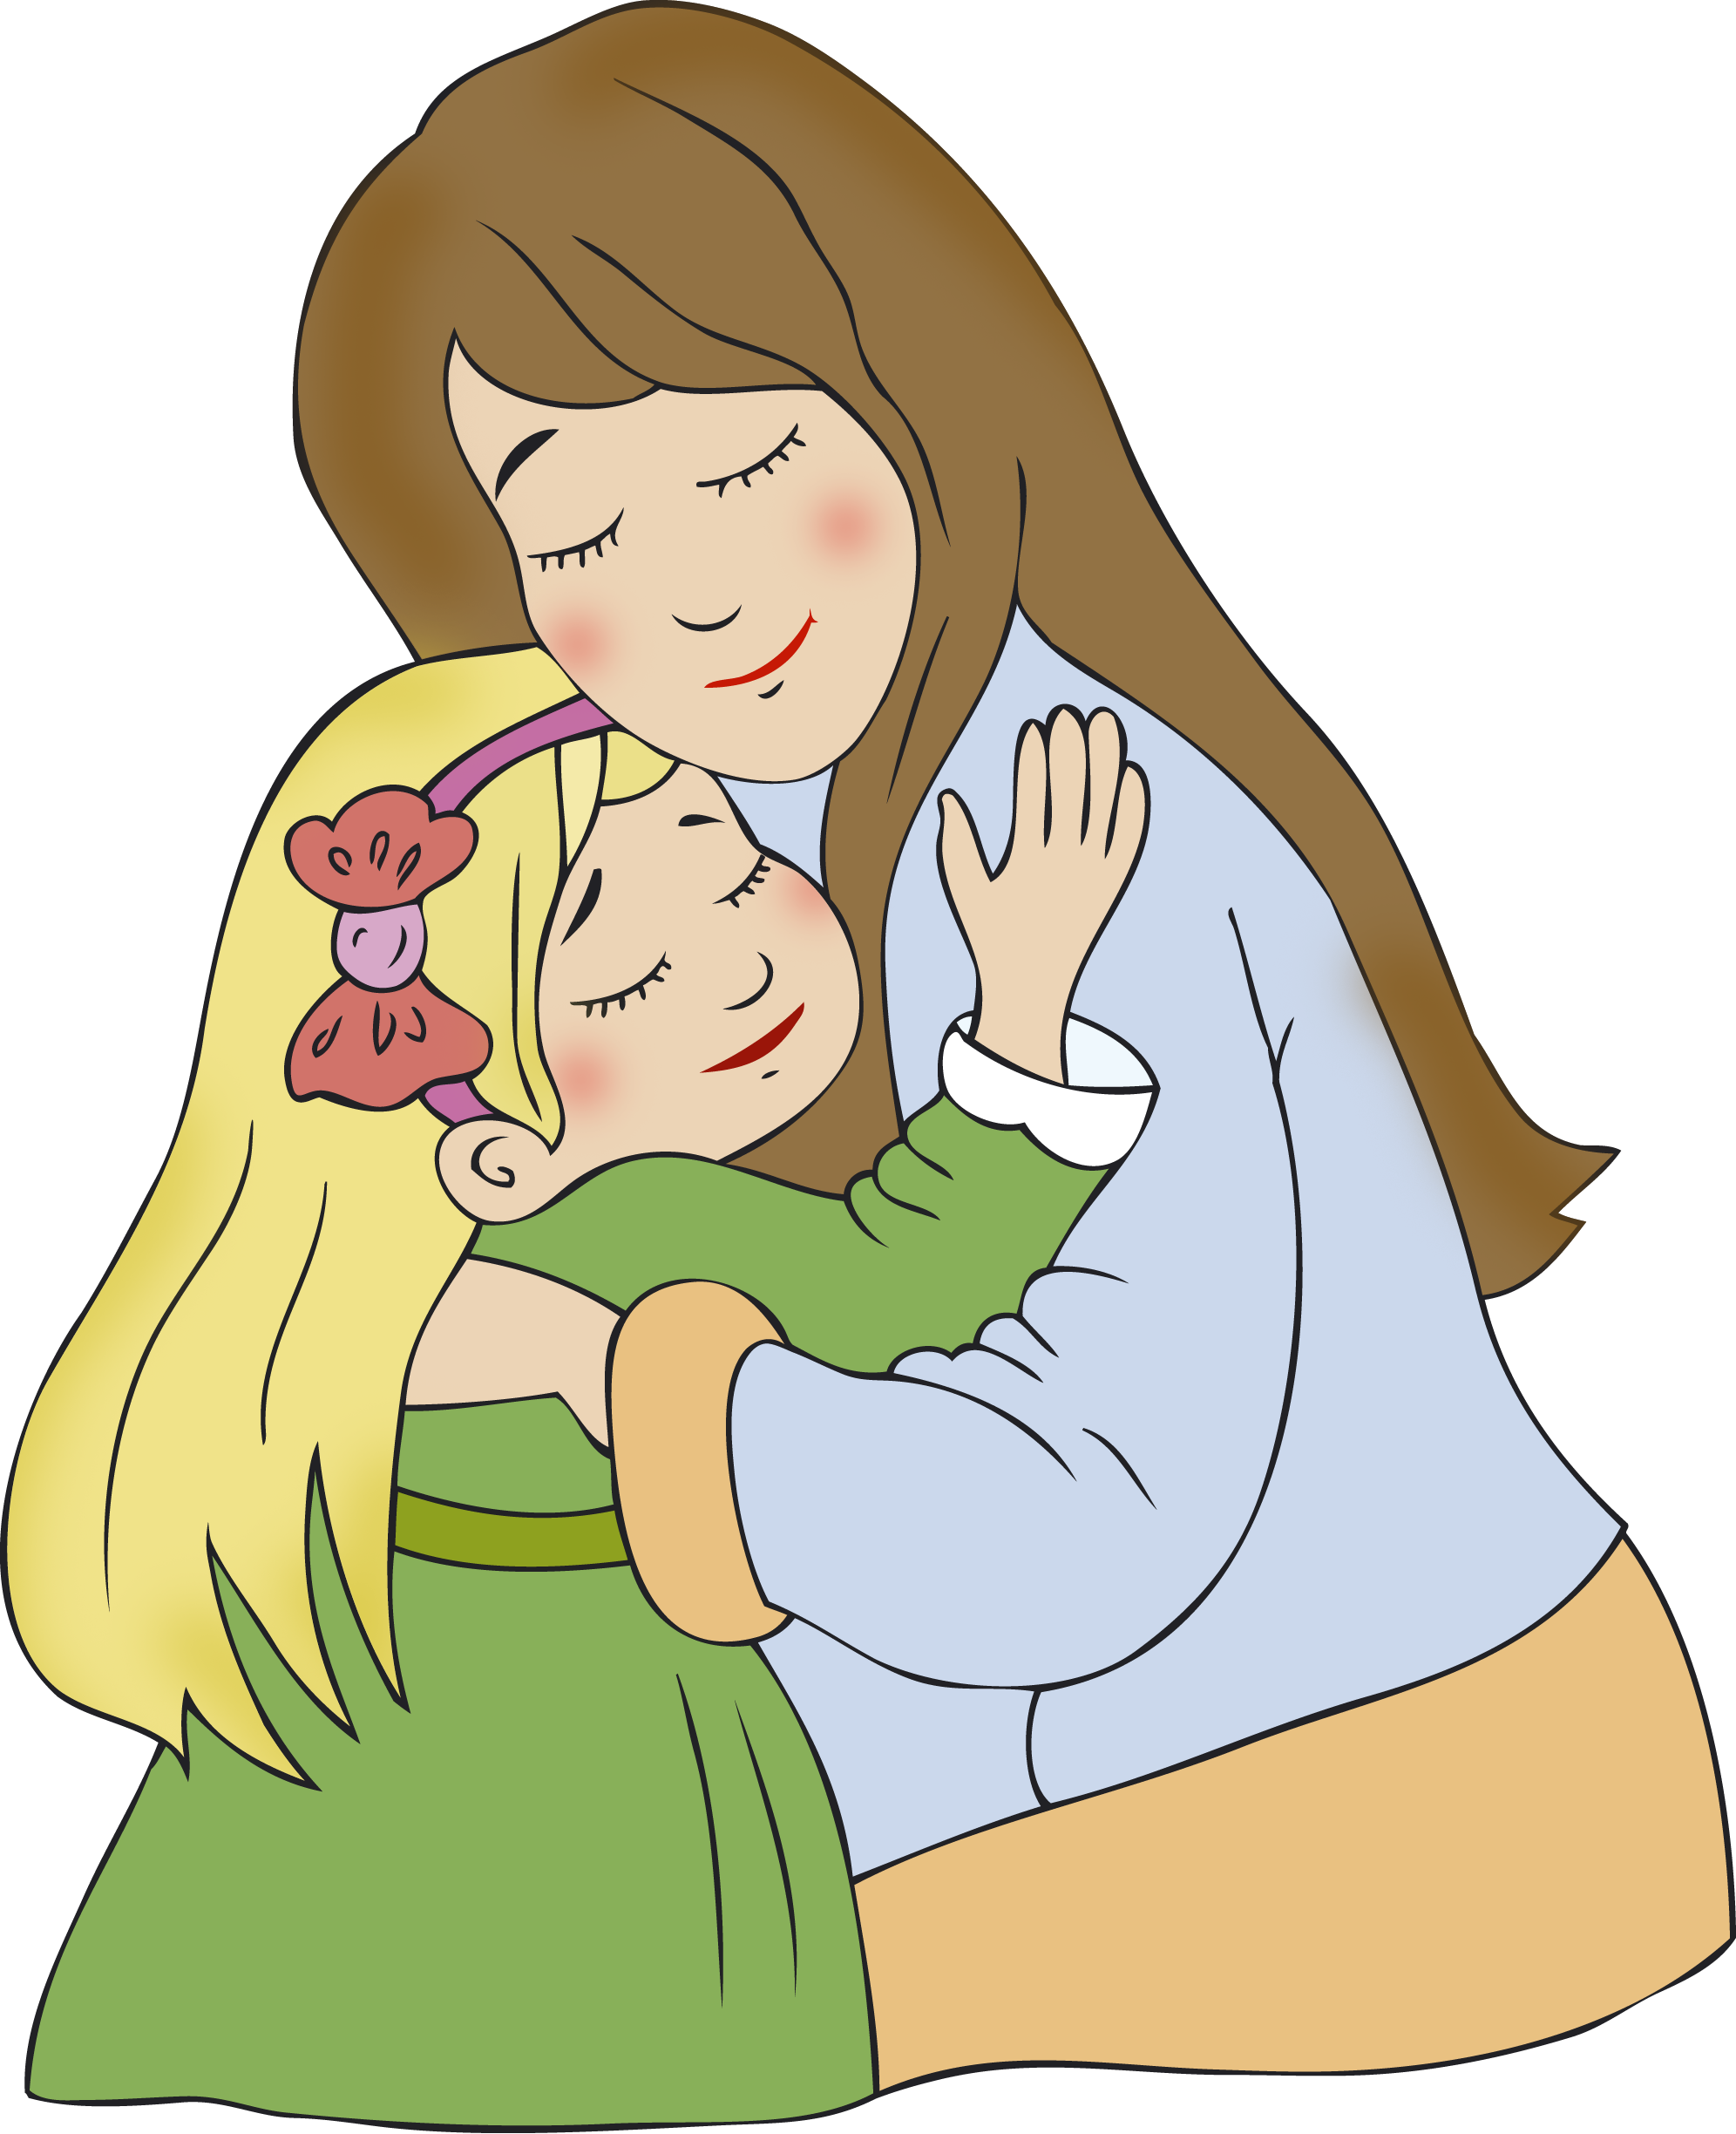 Рисунок ко Дню матери. Рисунок маме на день матери. Рисунок на тему день матери. Мама с ребенком рисунок. Мама обнимает ребенка под завалами